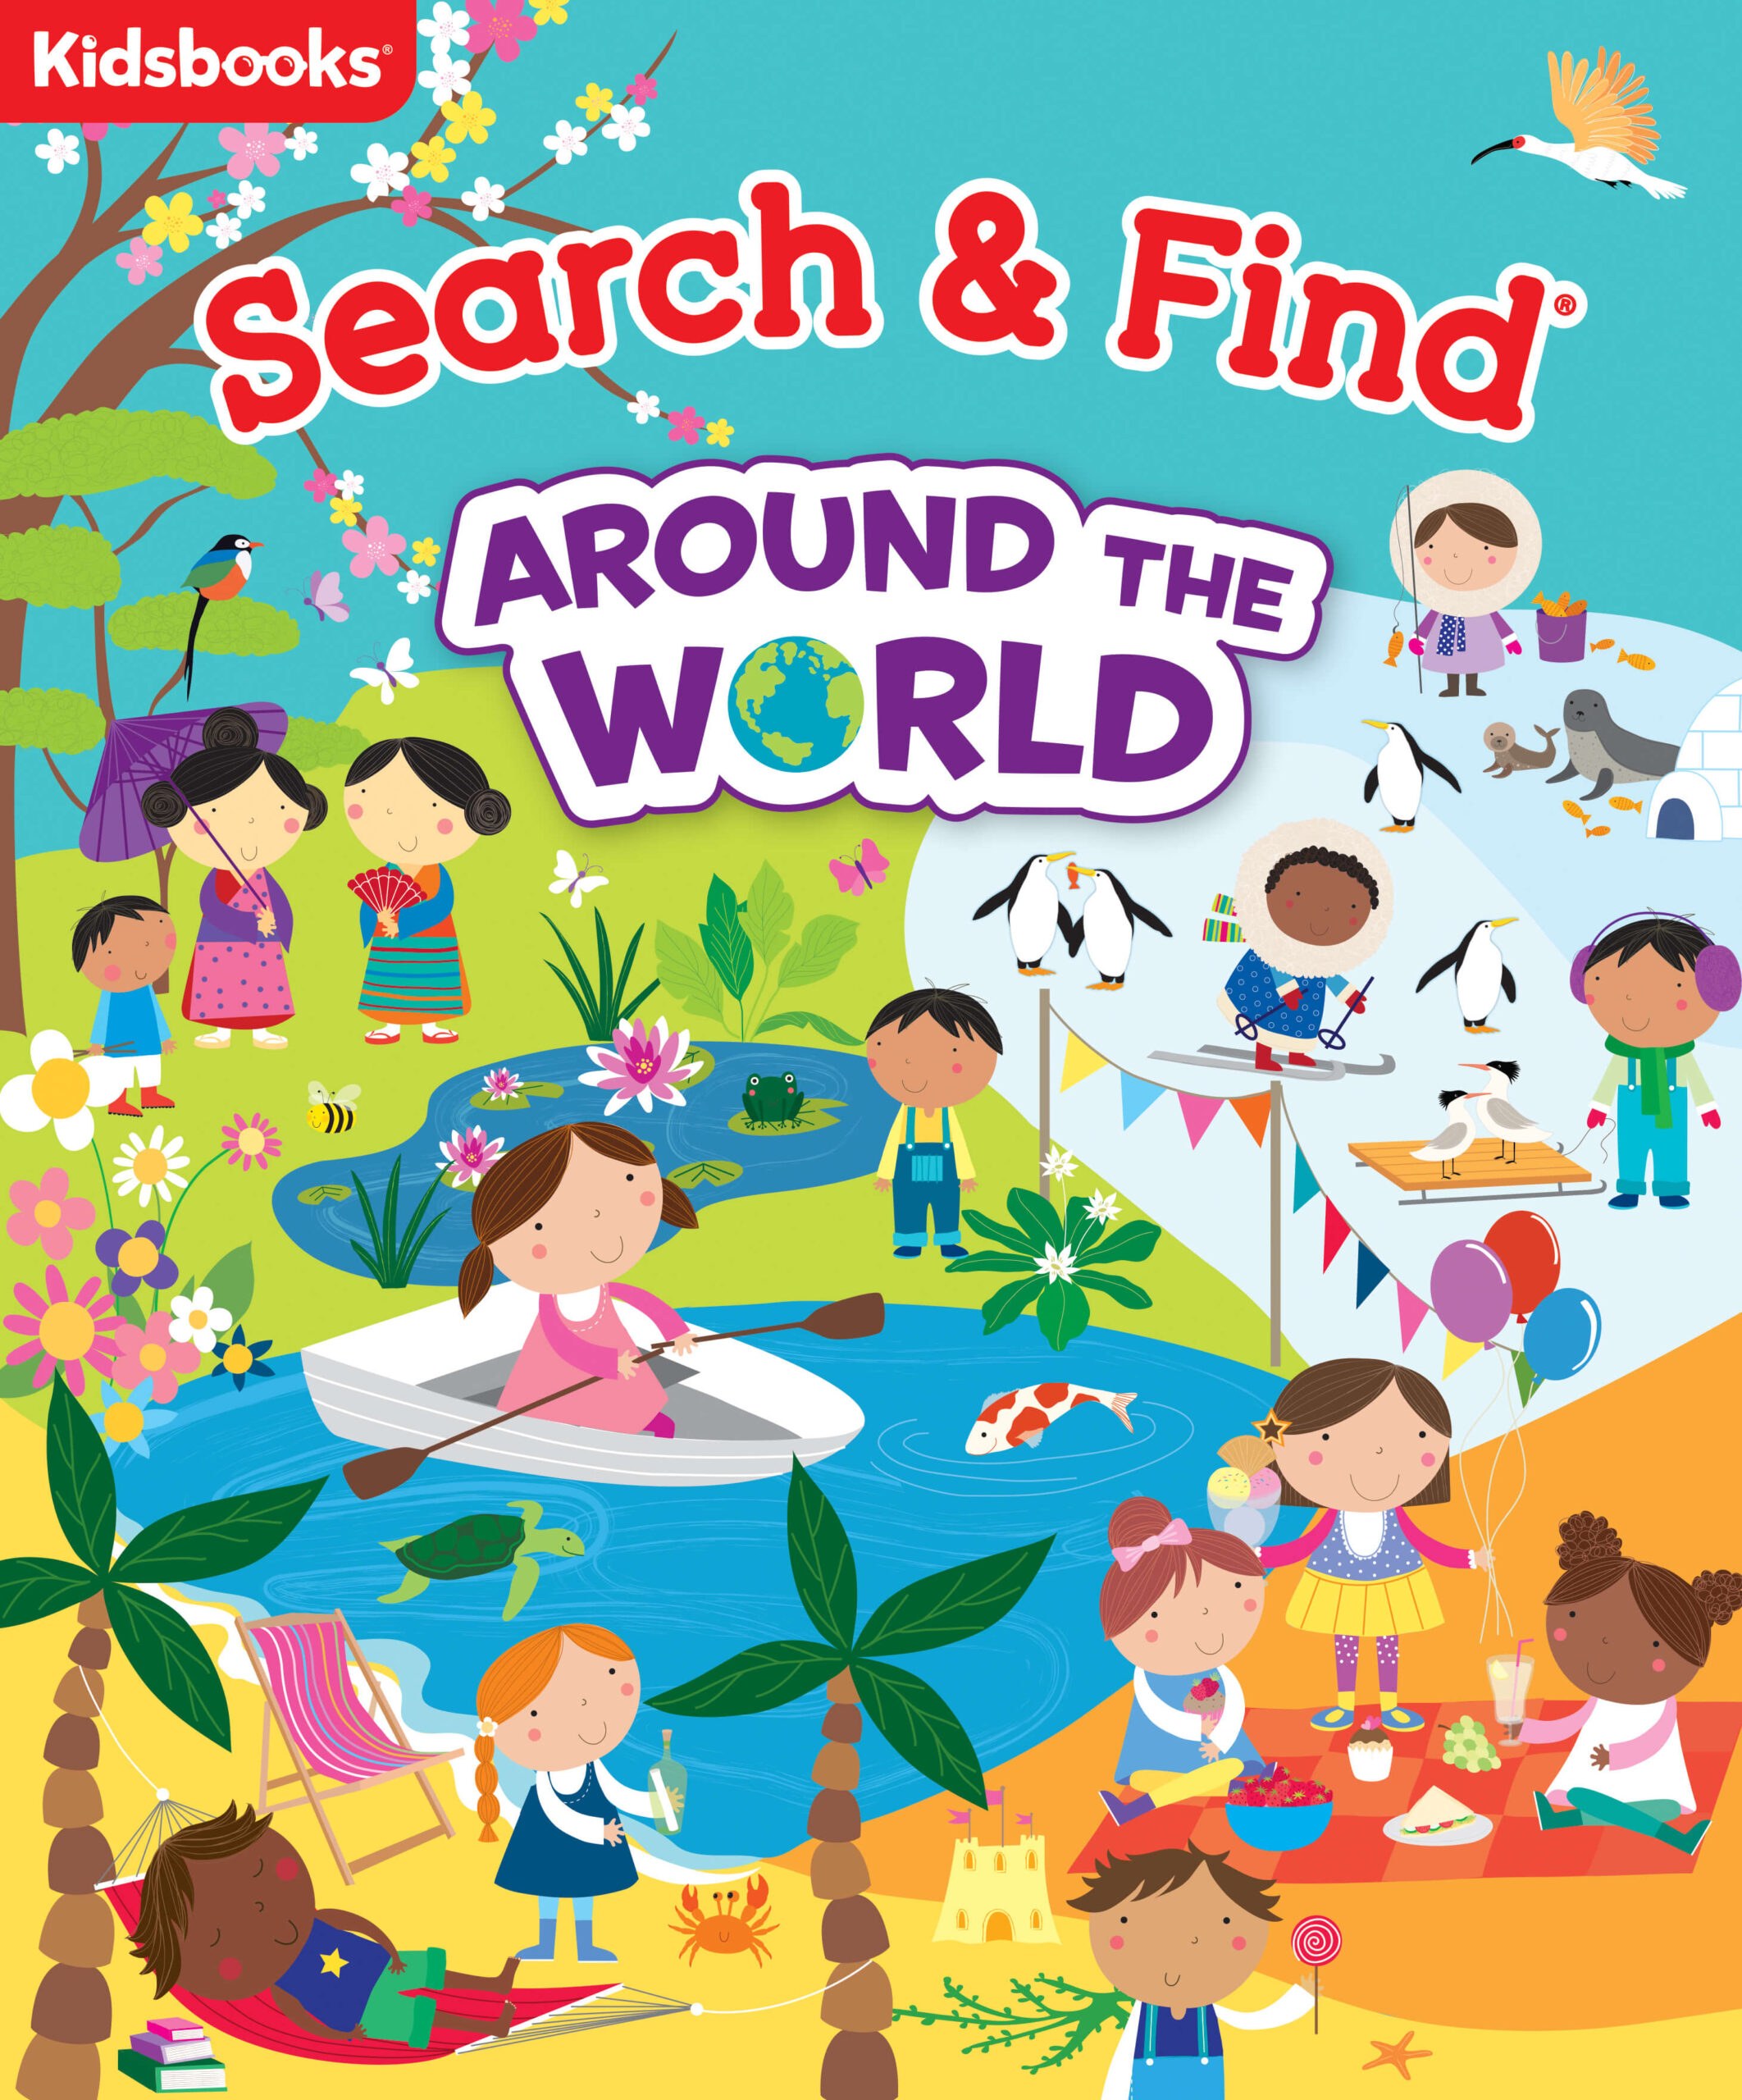 My First Search & Find: Around the World